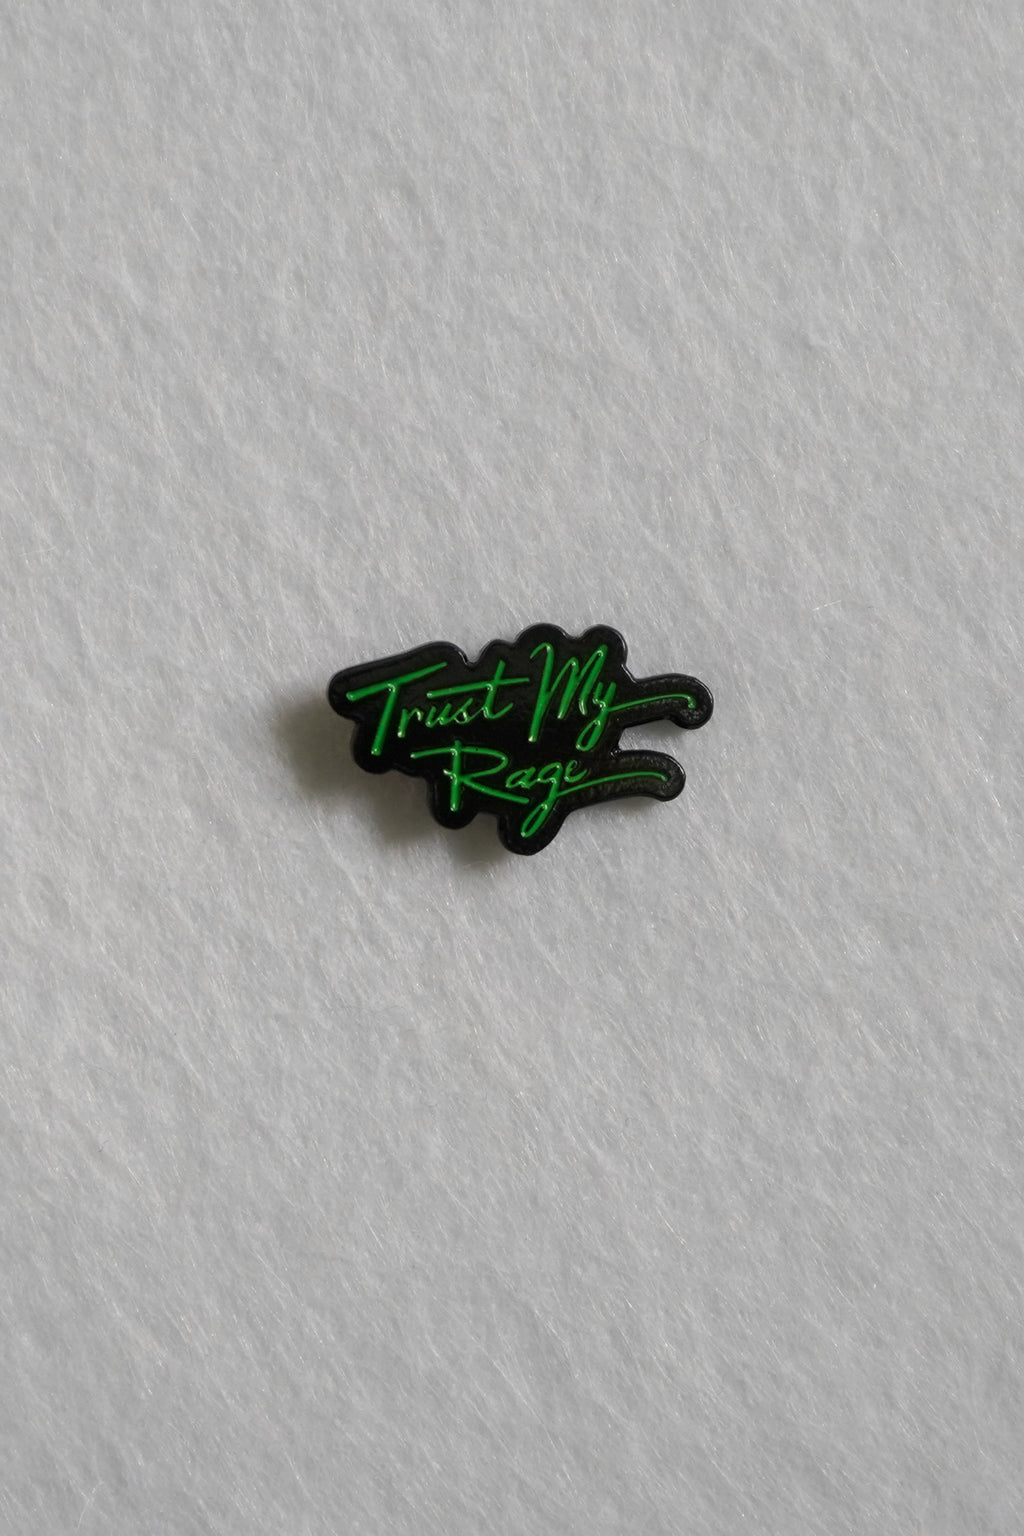 Trust My Rage Enamel Pin | Patreon Pin Club